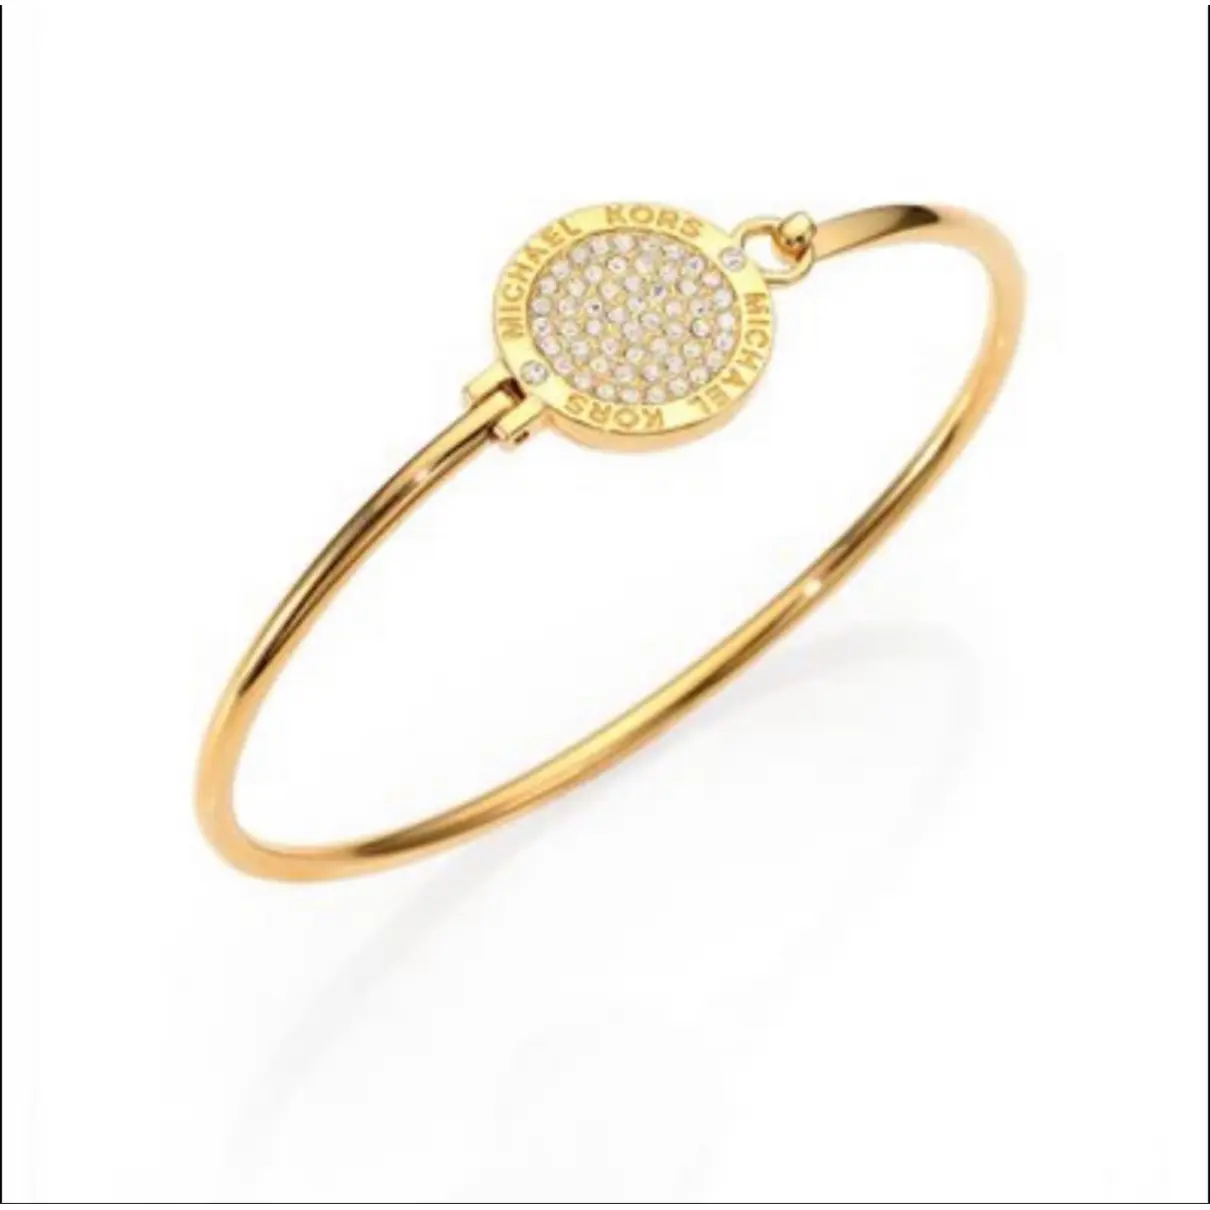 Buy Michael Kors Cloth bracelet online